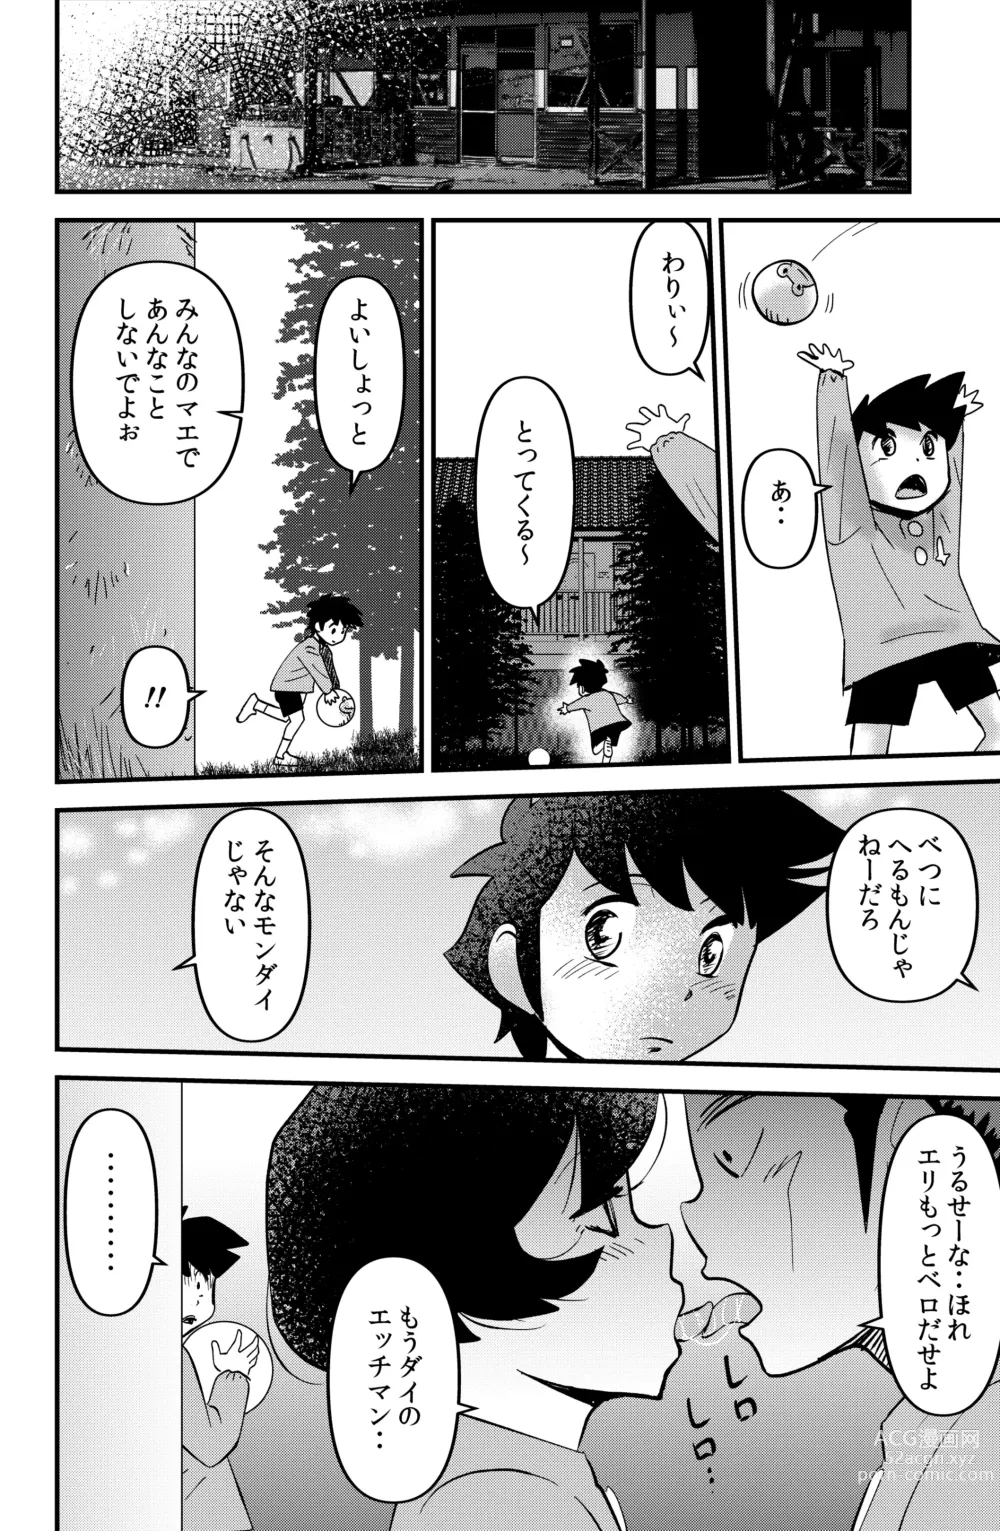 Page 4 of doujinshi Holy Shit!